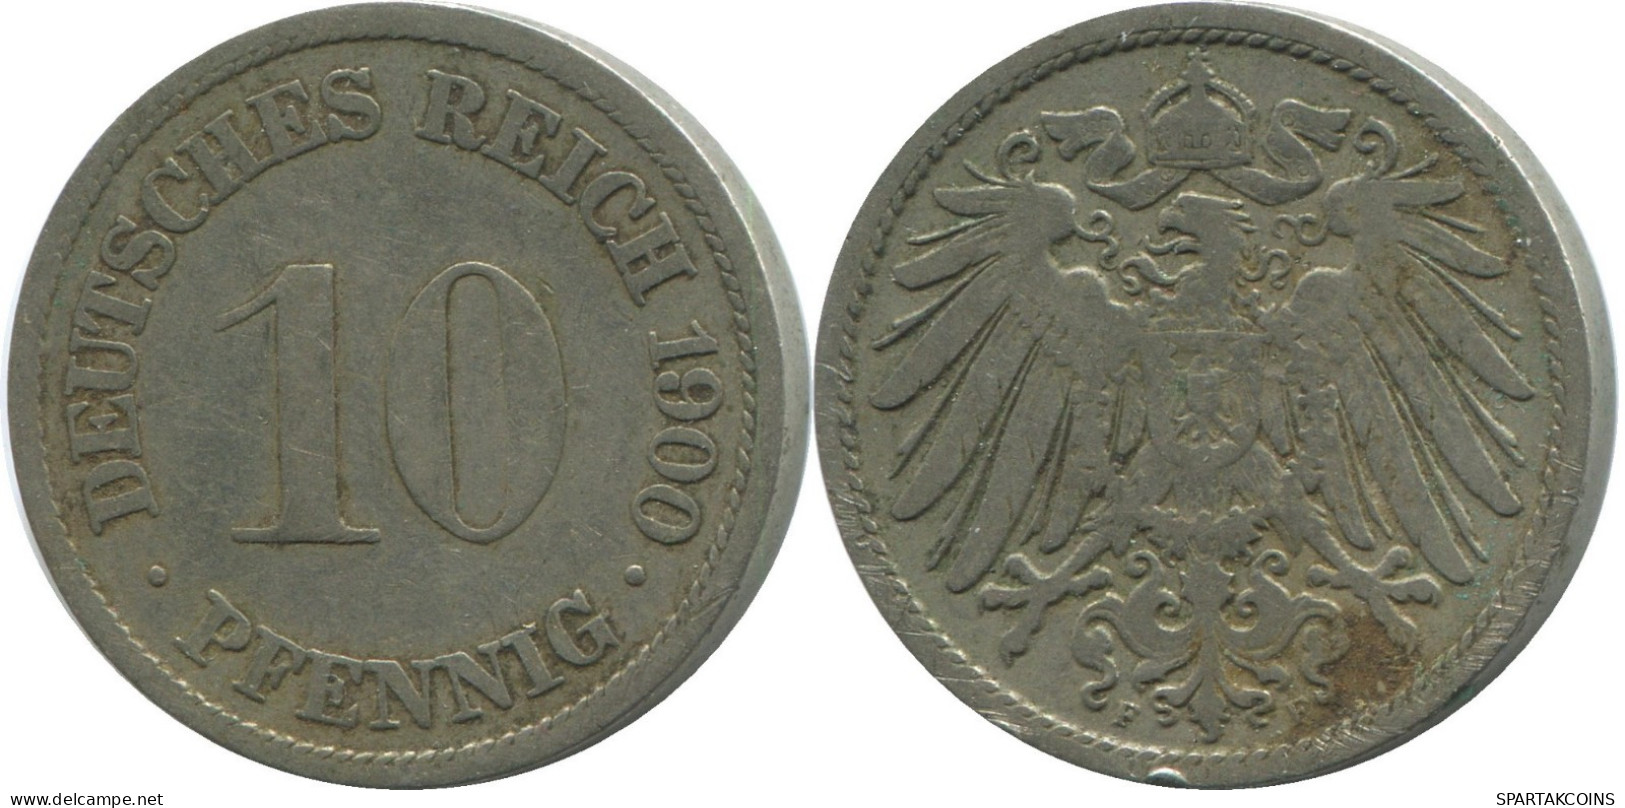 10 PFENNIG 1900 F ALEMANIA Moneda GERMANY #DE10456.5.E.A - 10 Pfennig